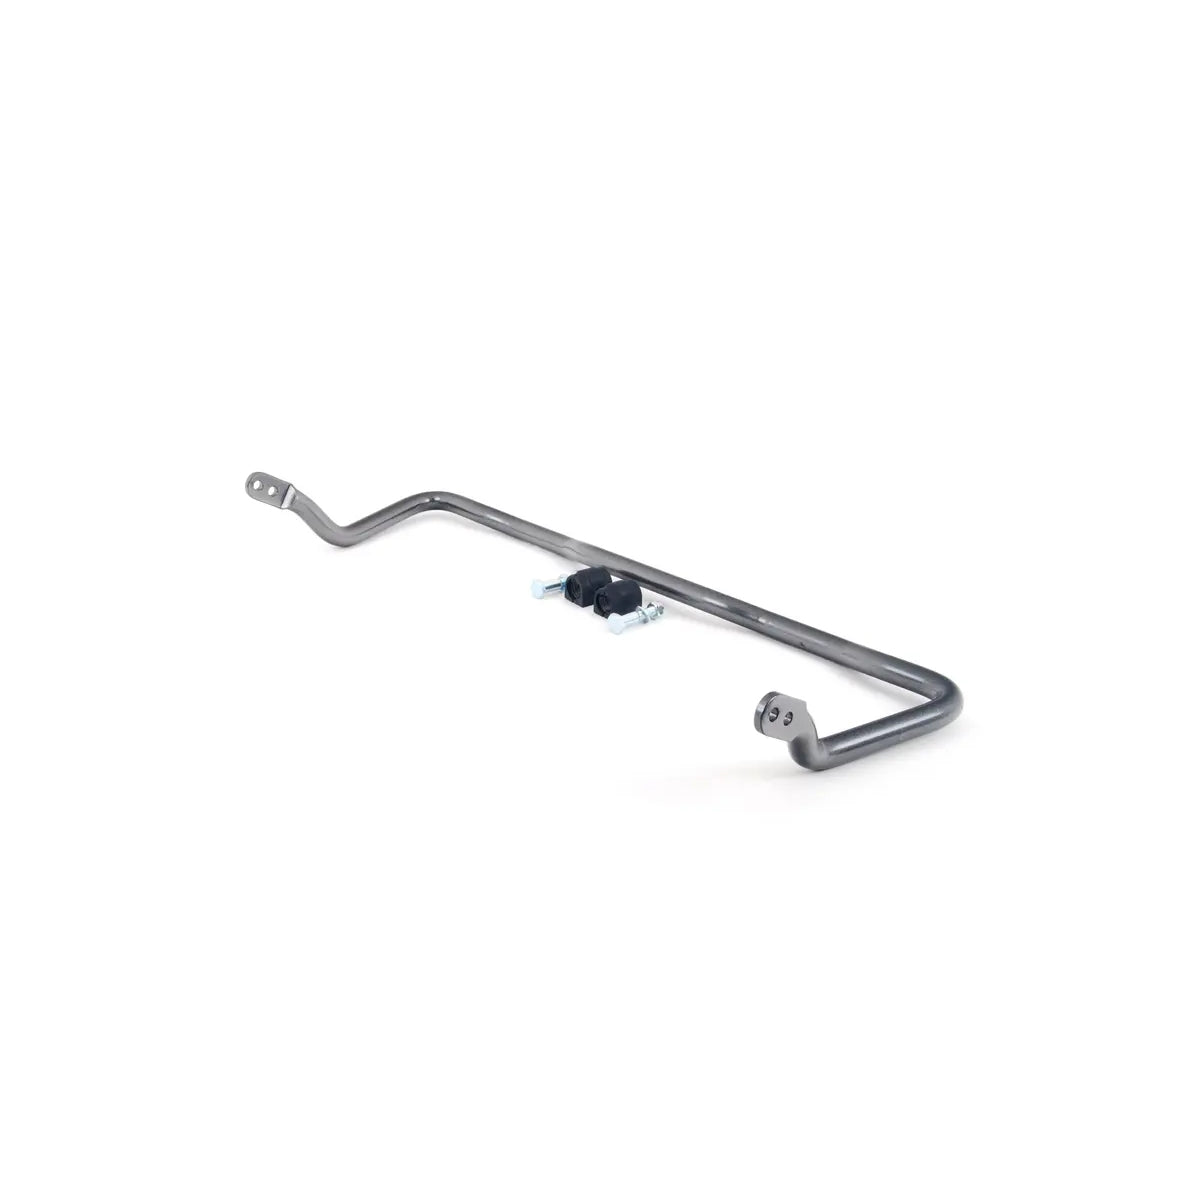 H&R Rear Sway Bar - Adjustable 24mm: E36 M3